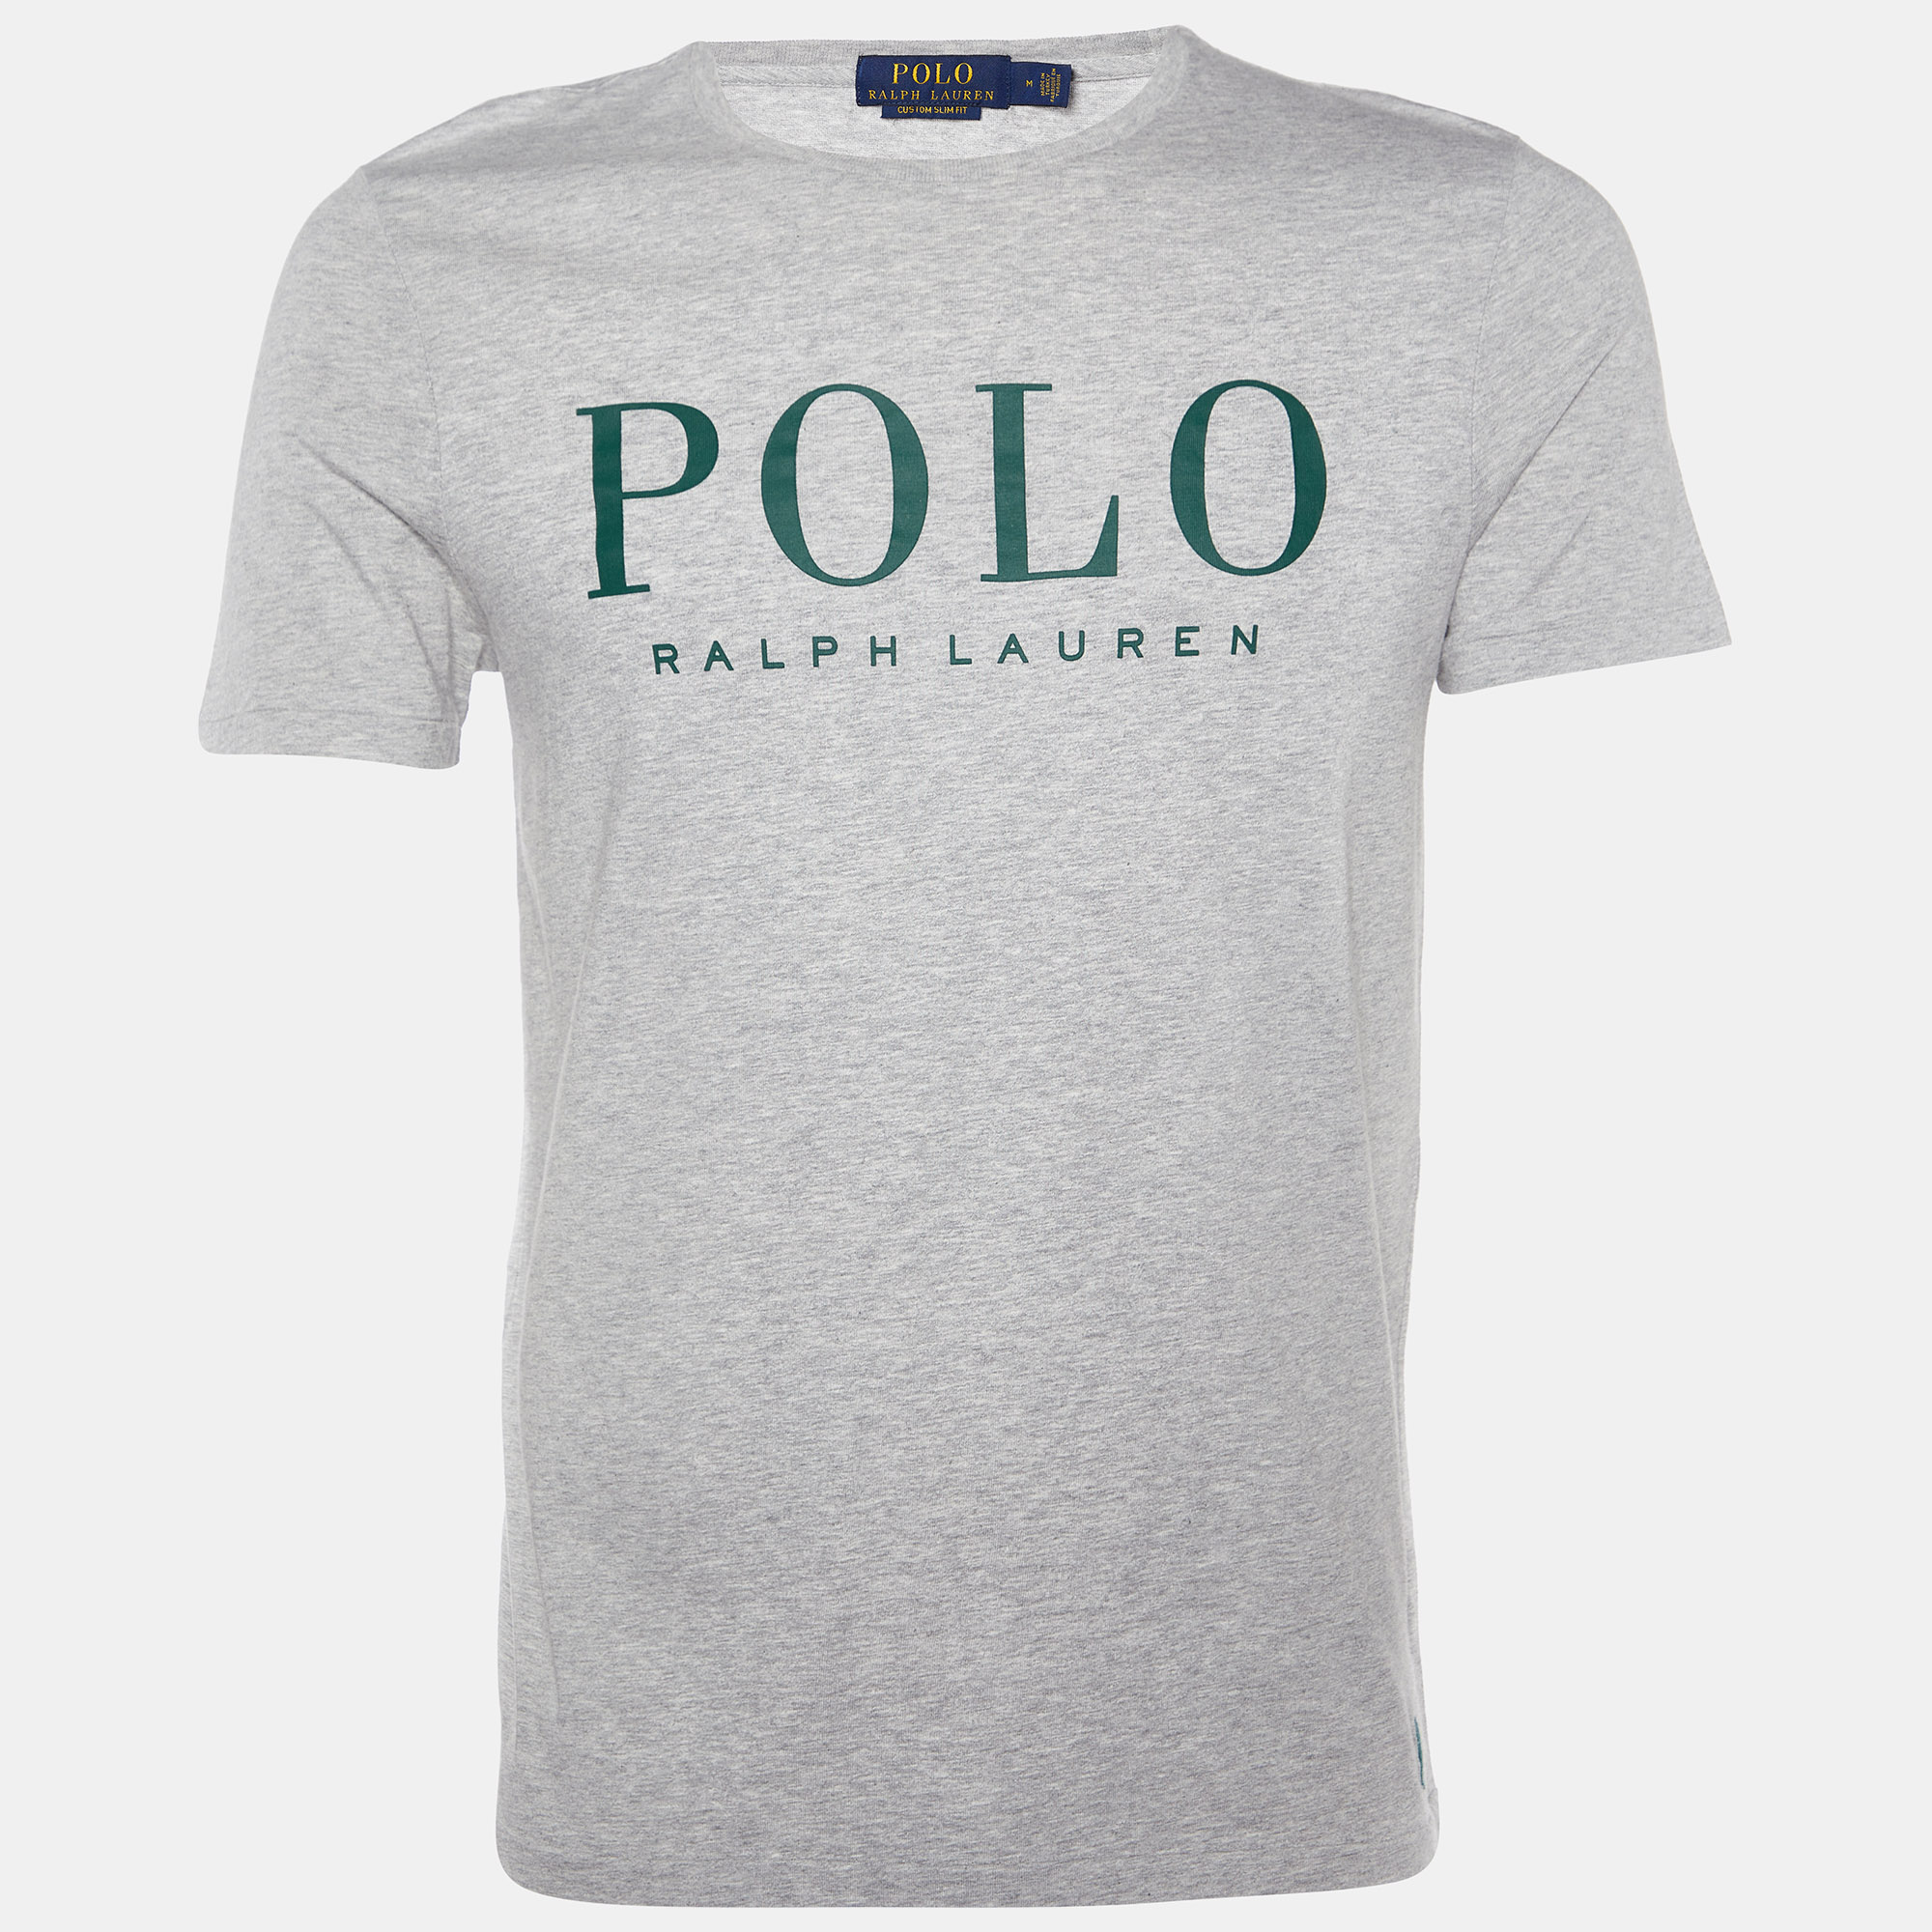 Polo ralph lauren grey logo print cotton custom slim fit t-shirt m